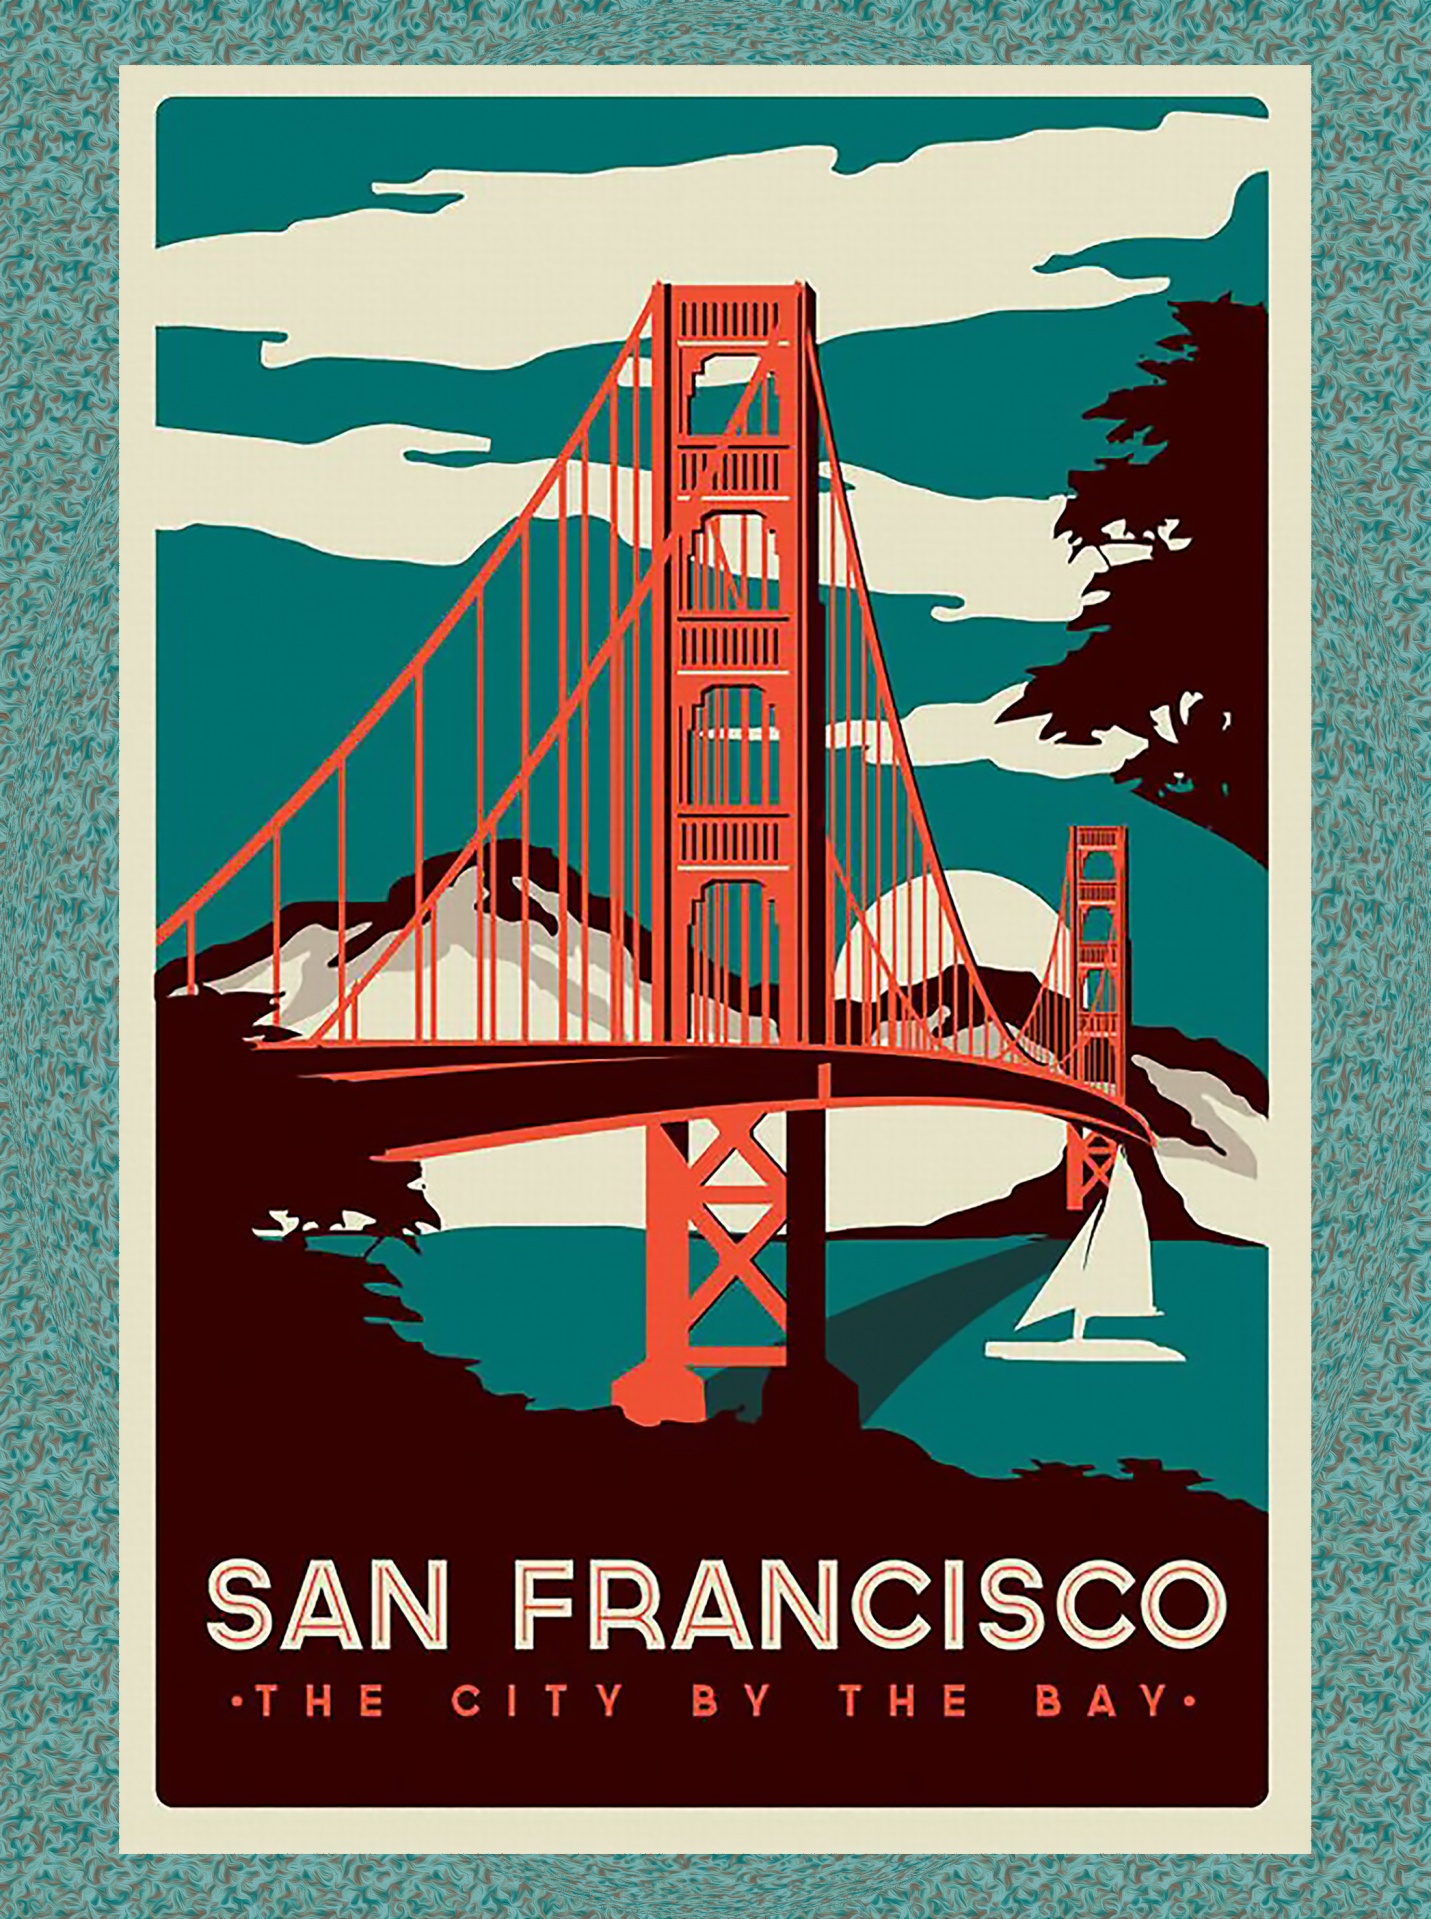 Remix of San Francisco Travel poster showing Golden Gate Bridge